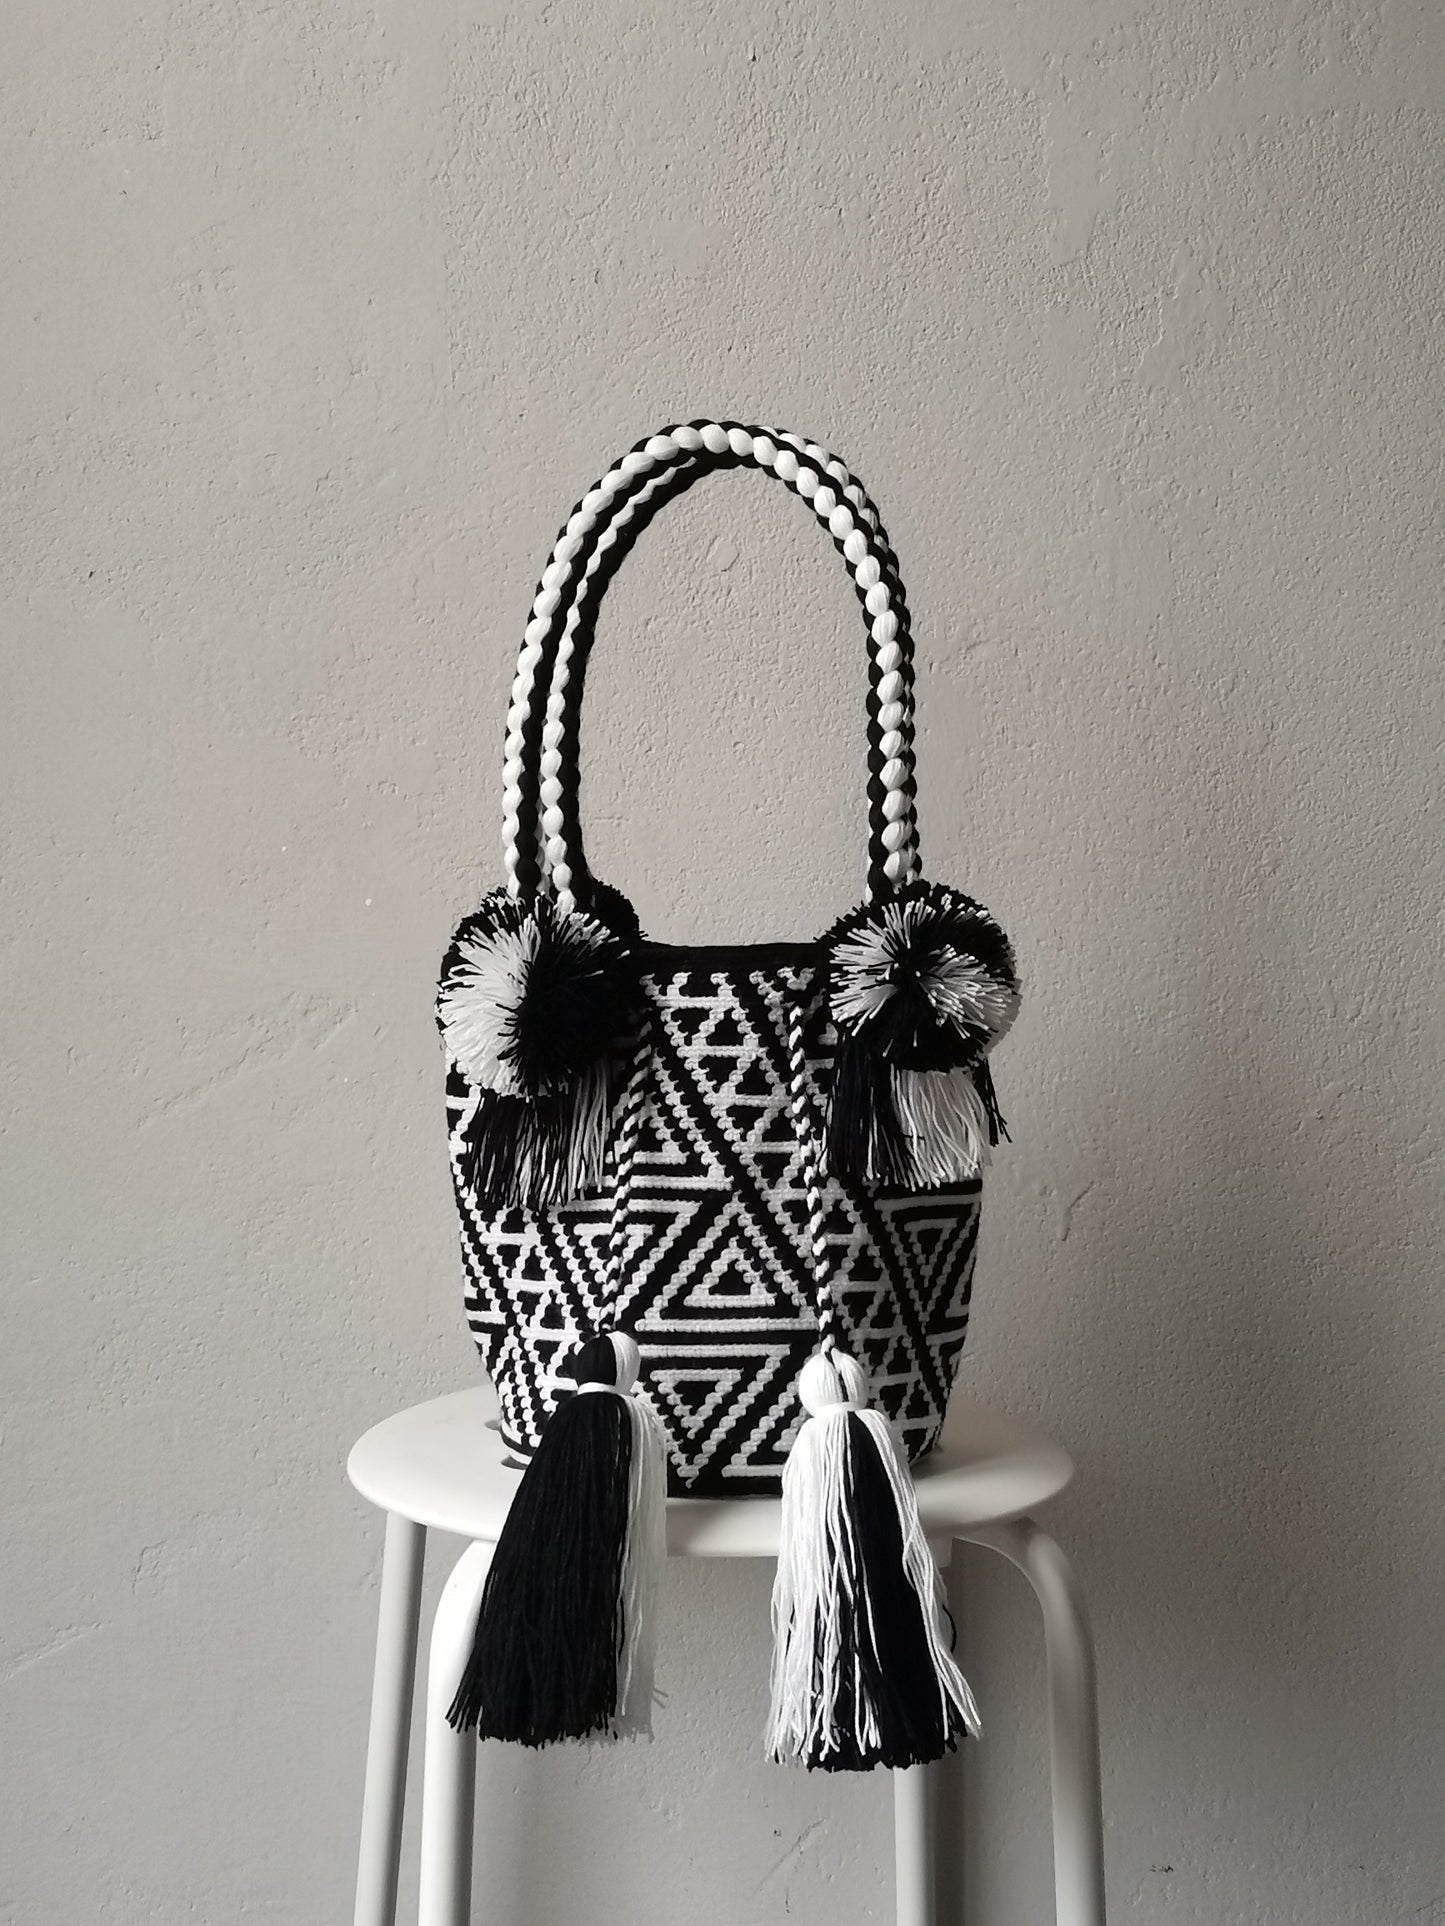 CAMPIONE - M black and white mochila handbag